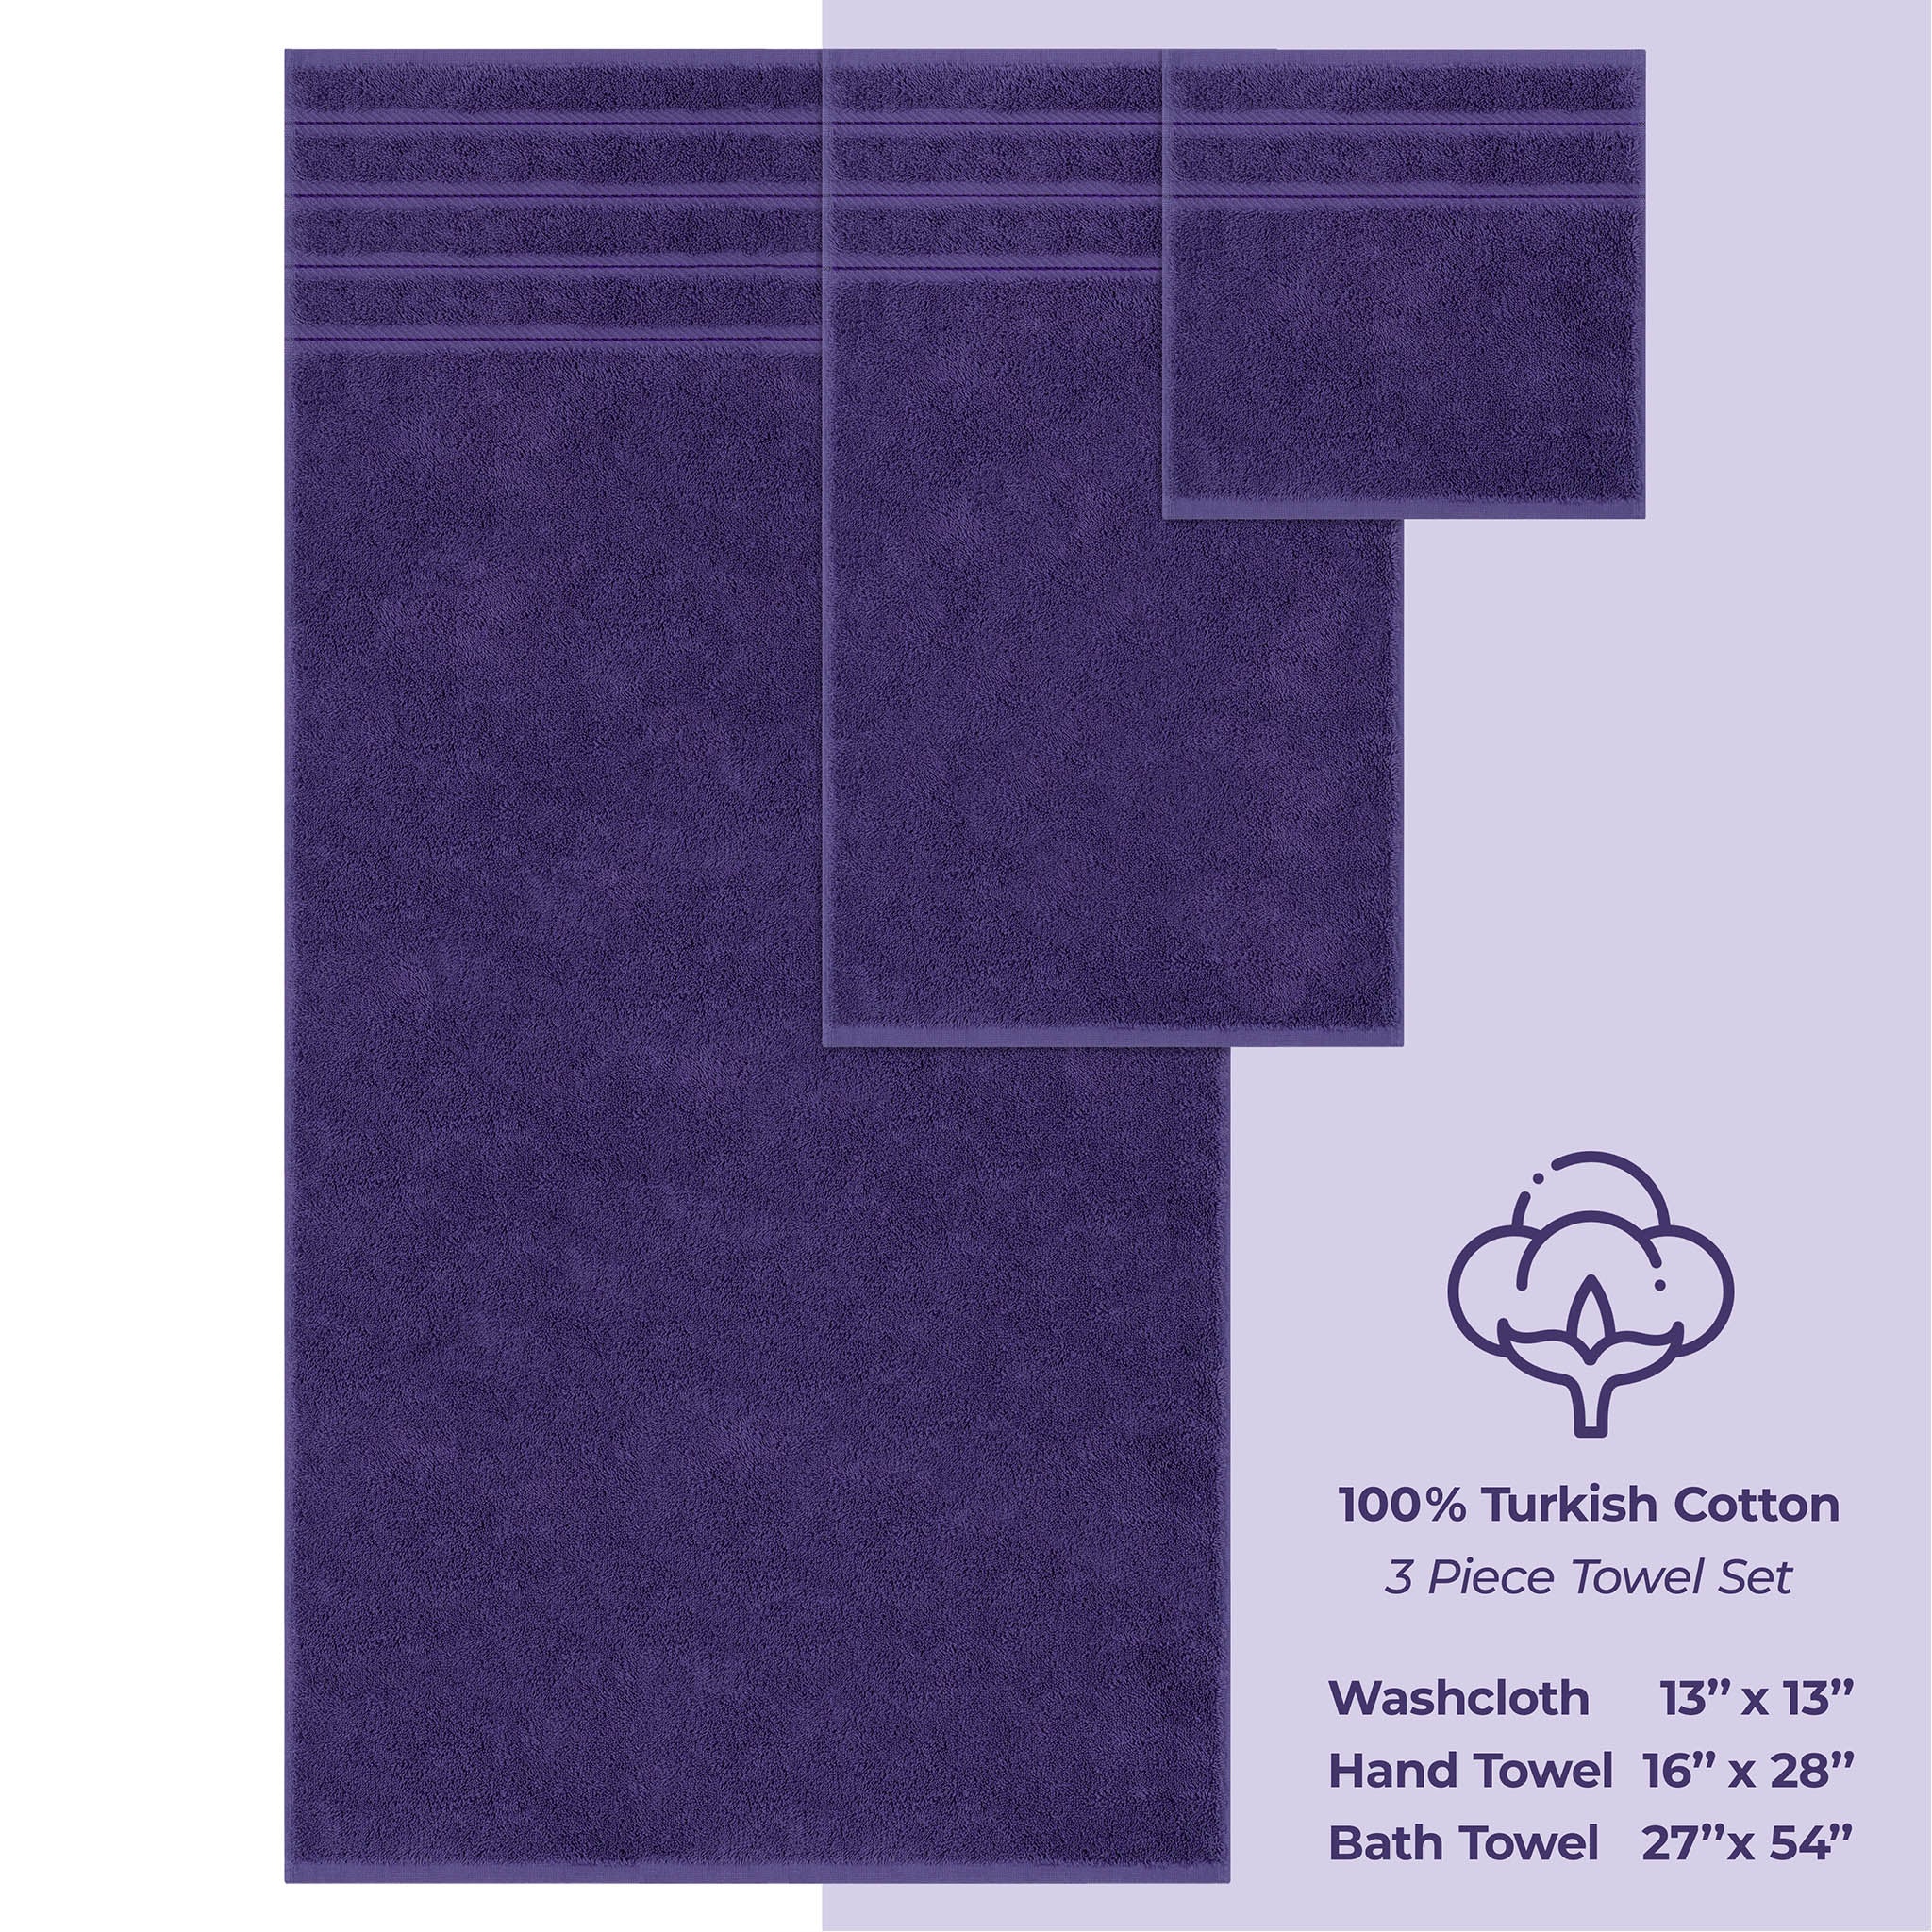 American Soft Linen 3 Piece Luxury Hotel Towel Set 20 set case pack purple-4